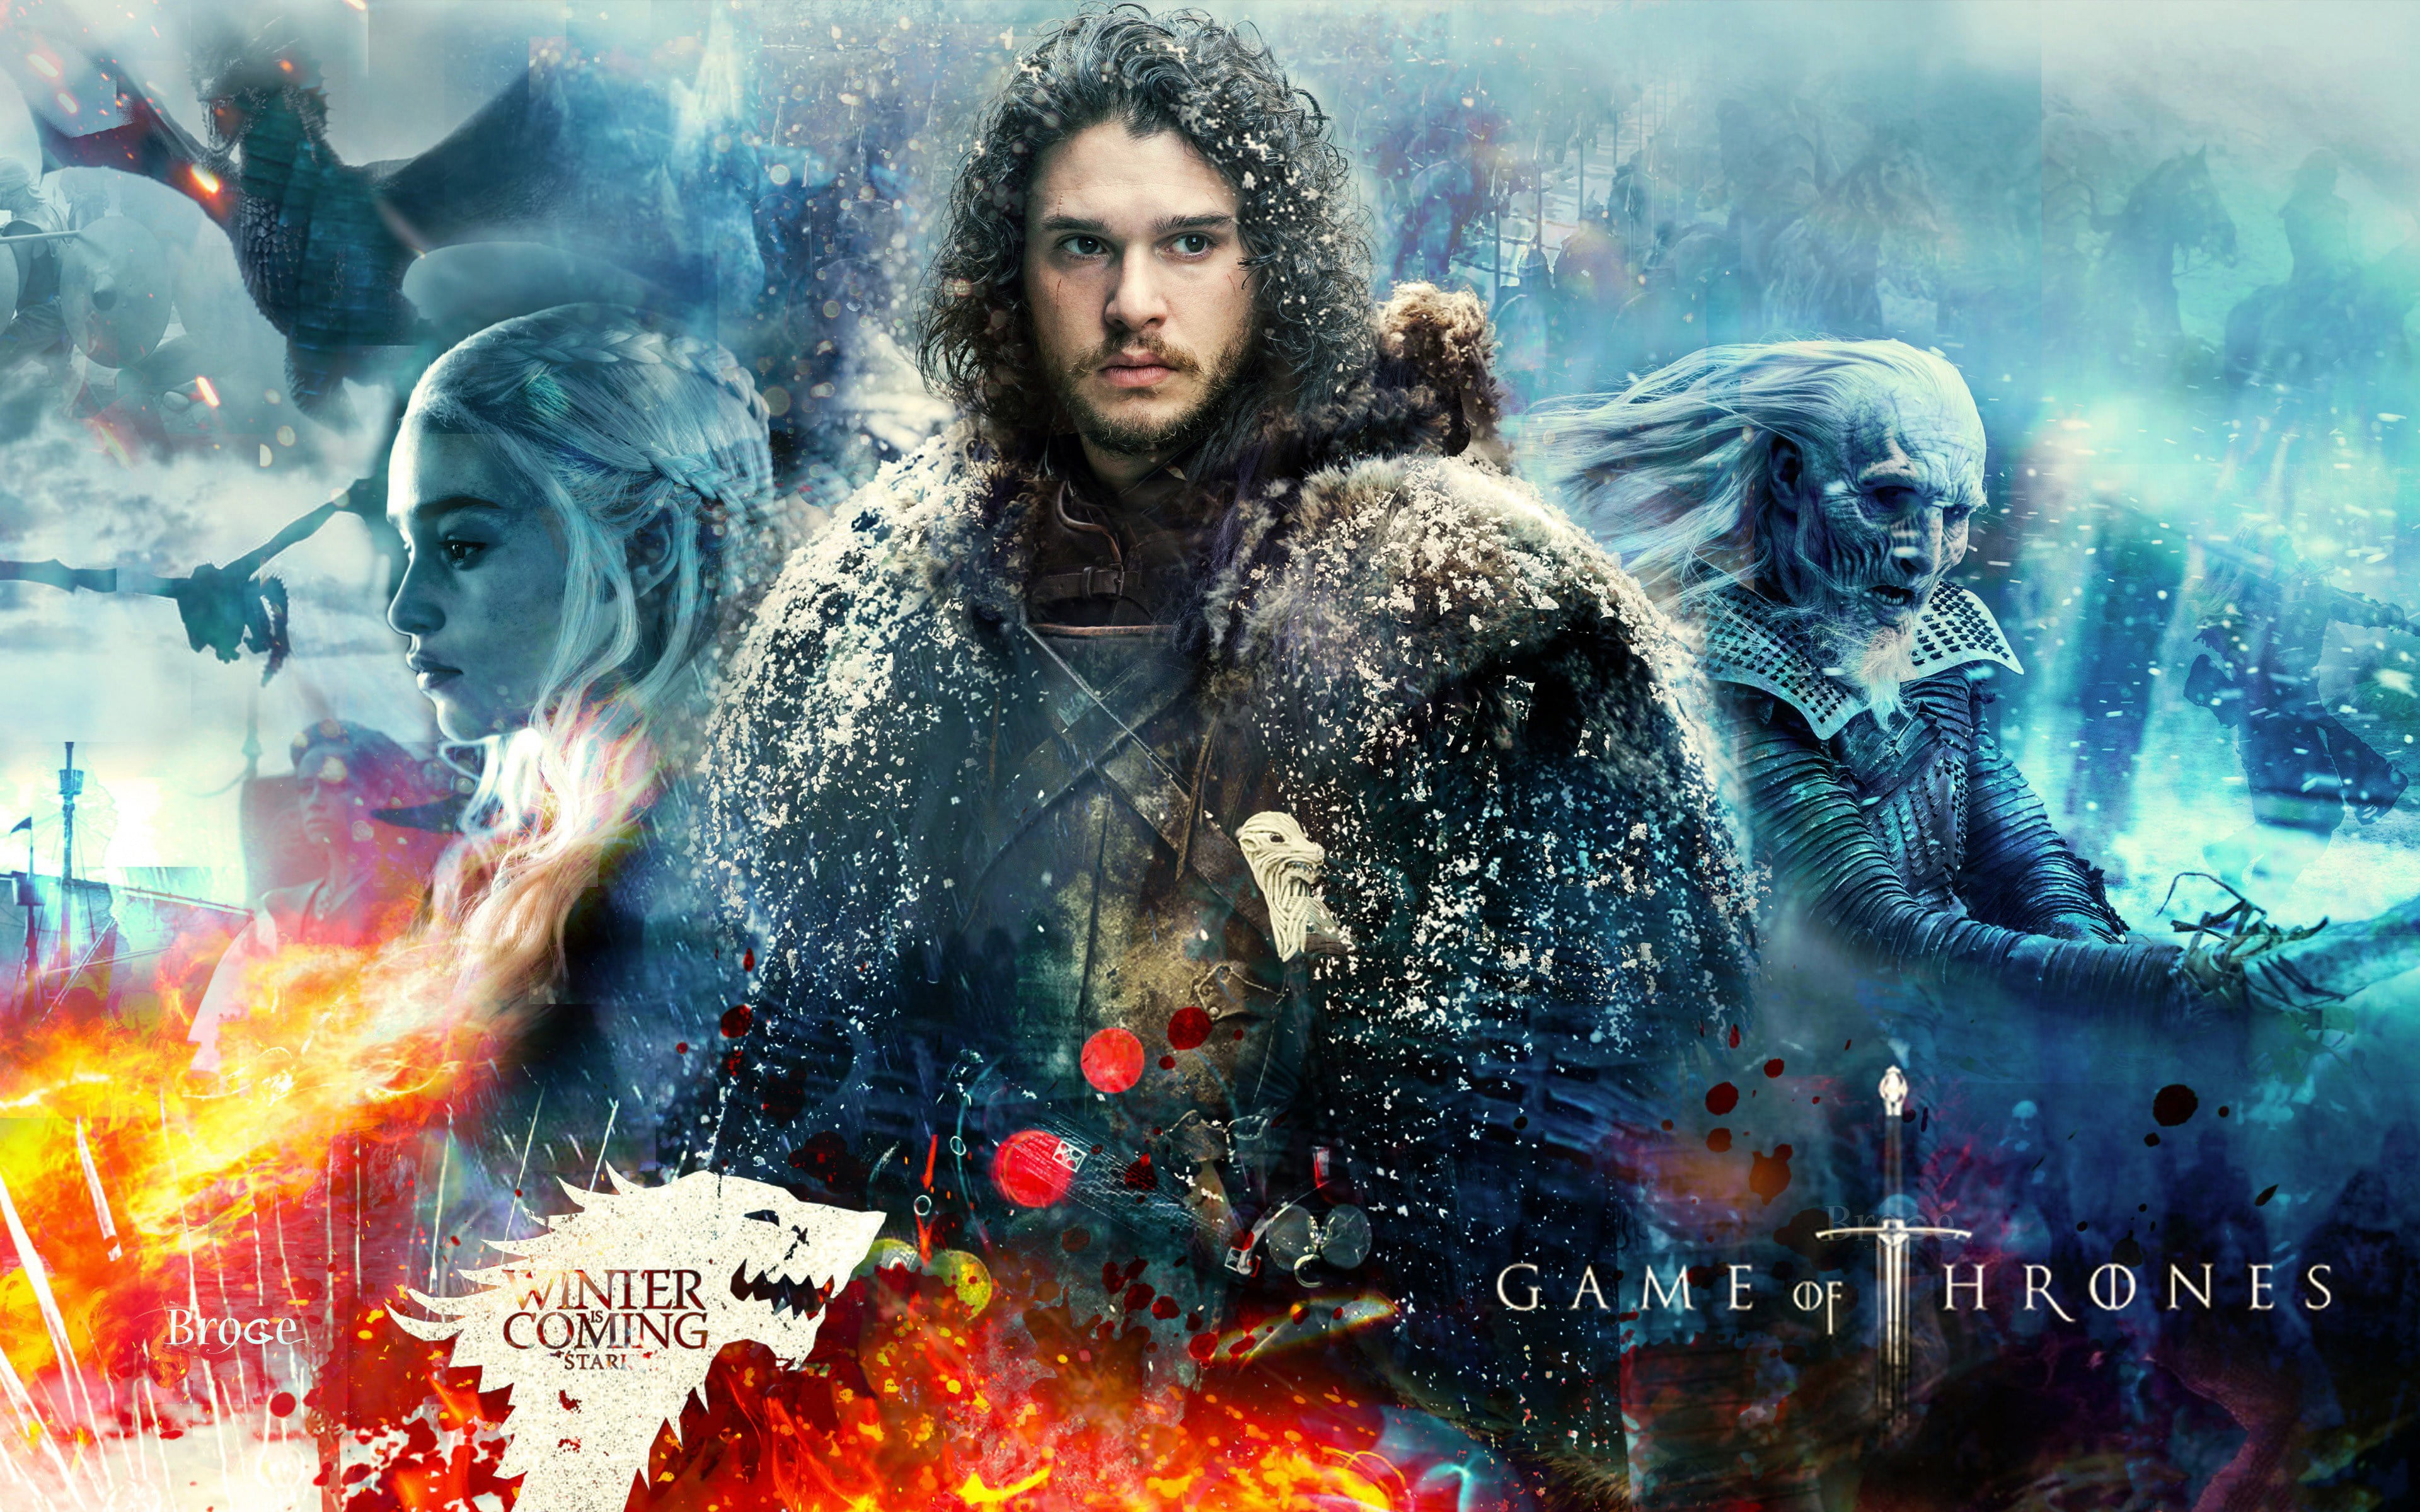 Game of Thrones digital wallpaper, fire, ice, undead, woman, ken